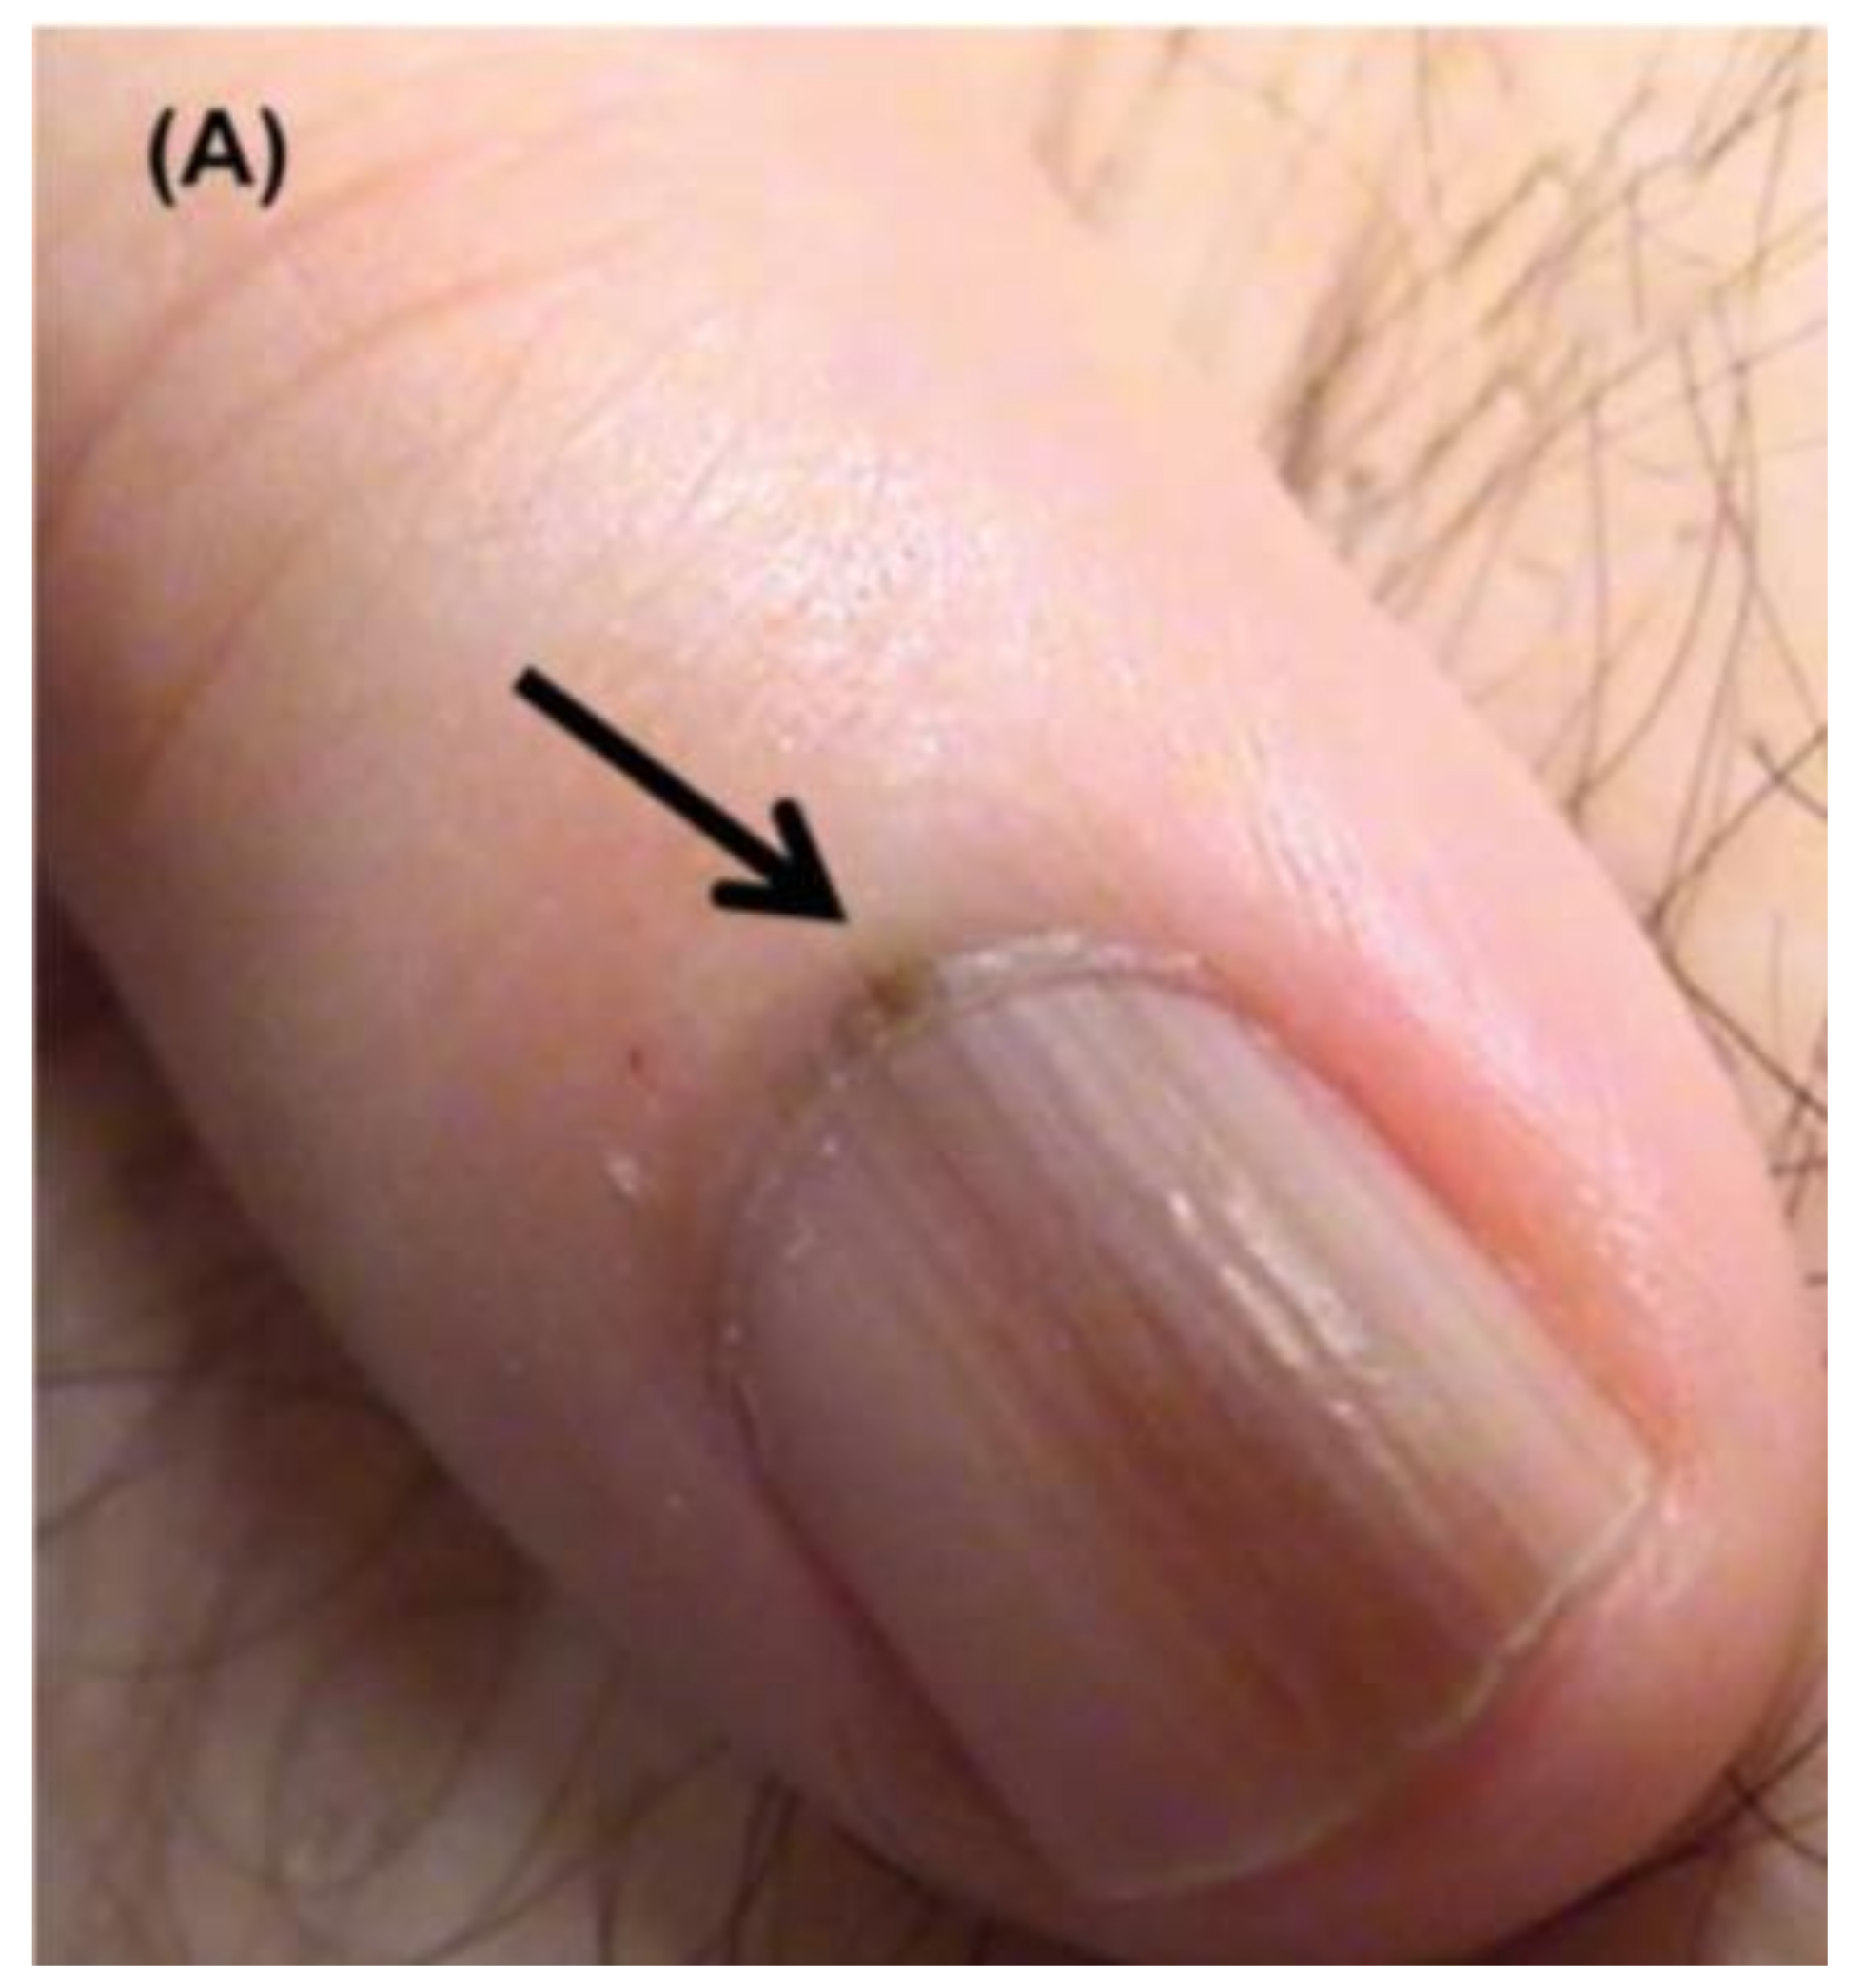 Man's Nail 'Splinter' Was Really a Tumor | Live Science